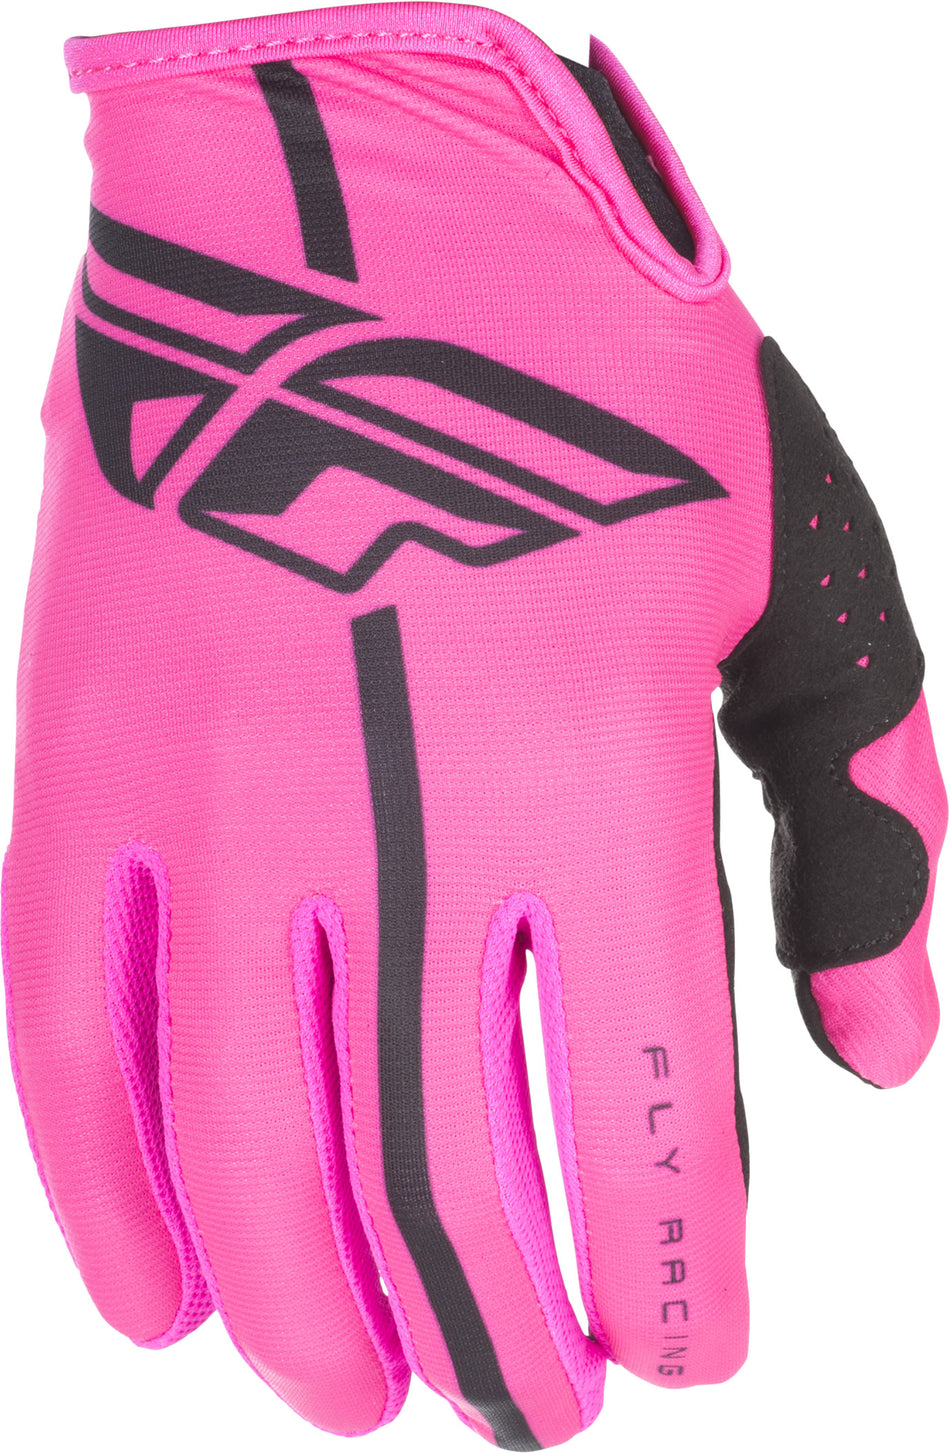 FLY RACING Lite Gloves Neon Pink/Black Sz 12 371-01712